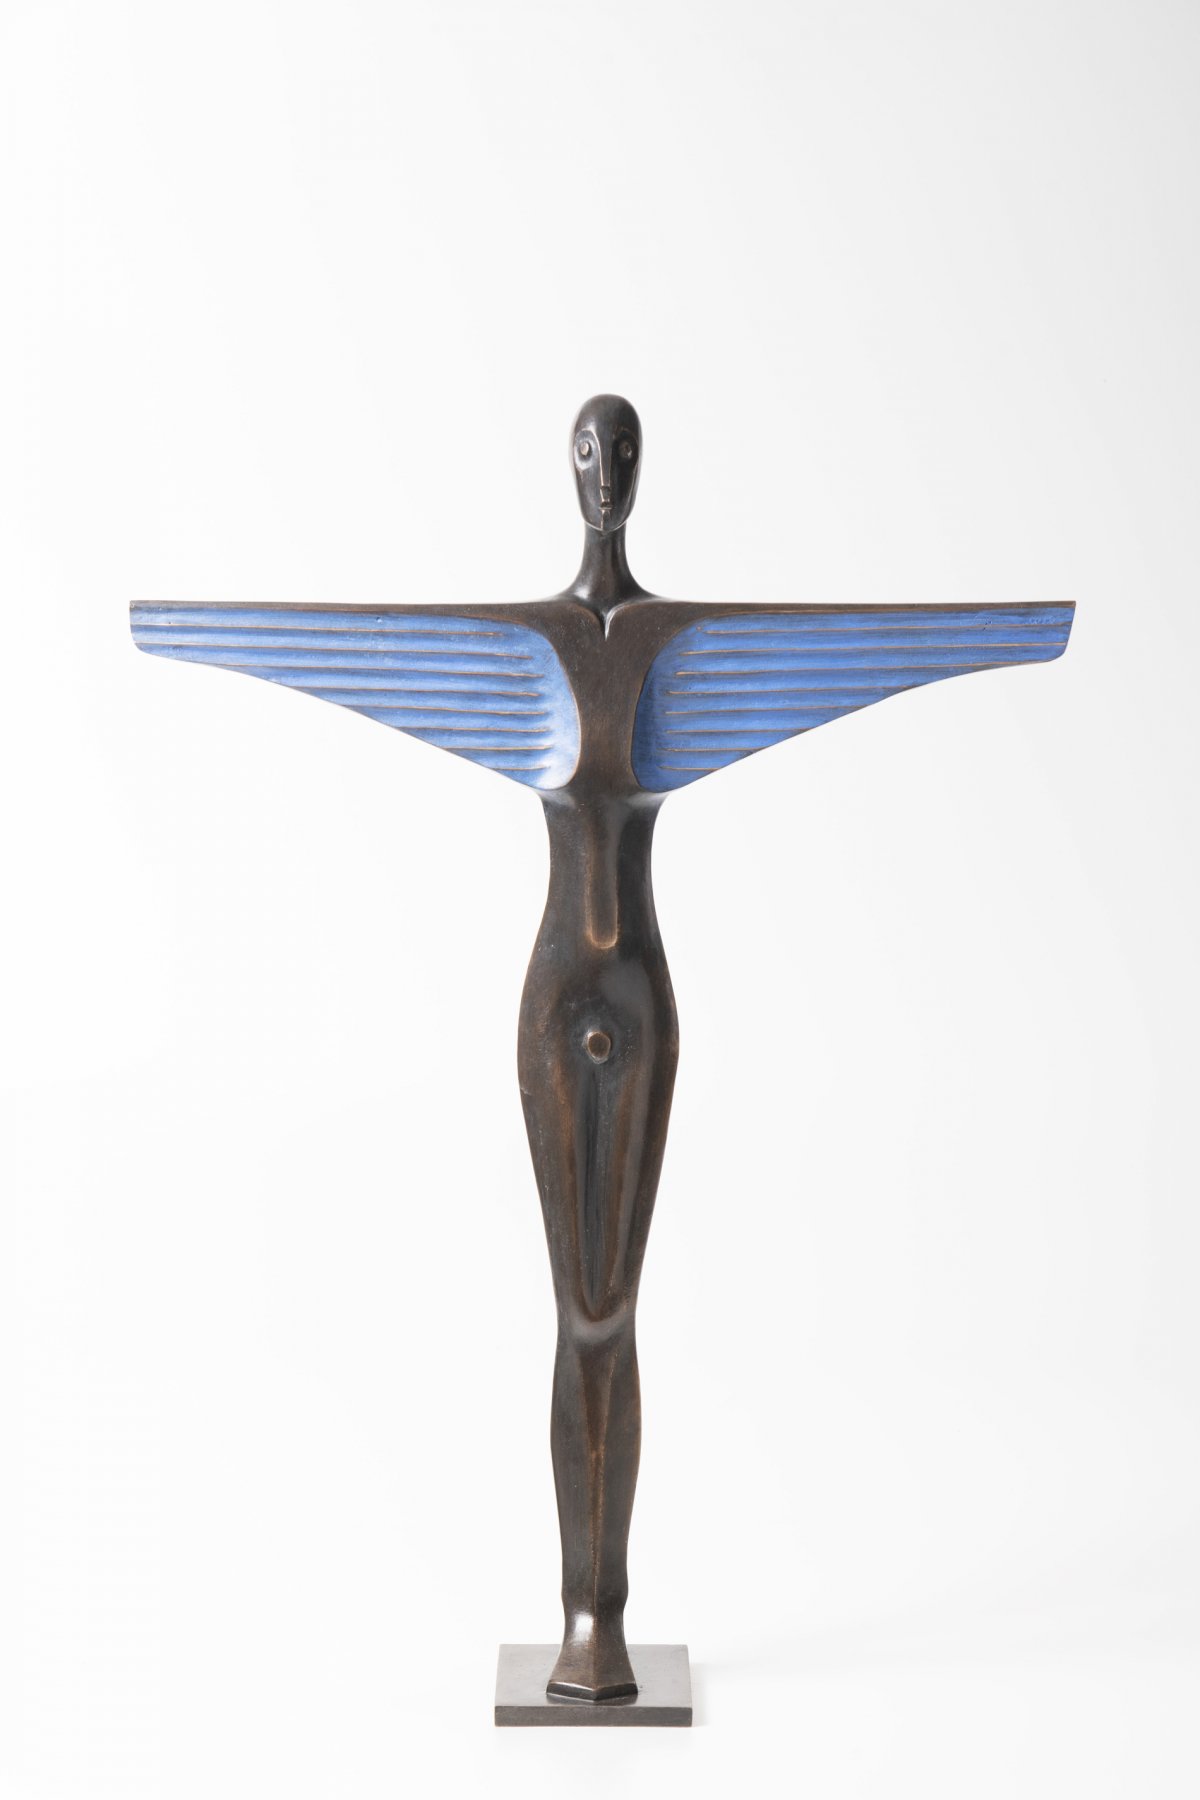 2020, Jádro Anděla II, Bronz, 67 cm, 2020, Core from The Angel, Bronze,67, cm